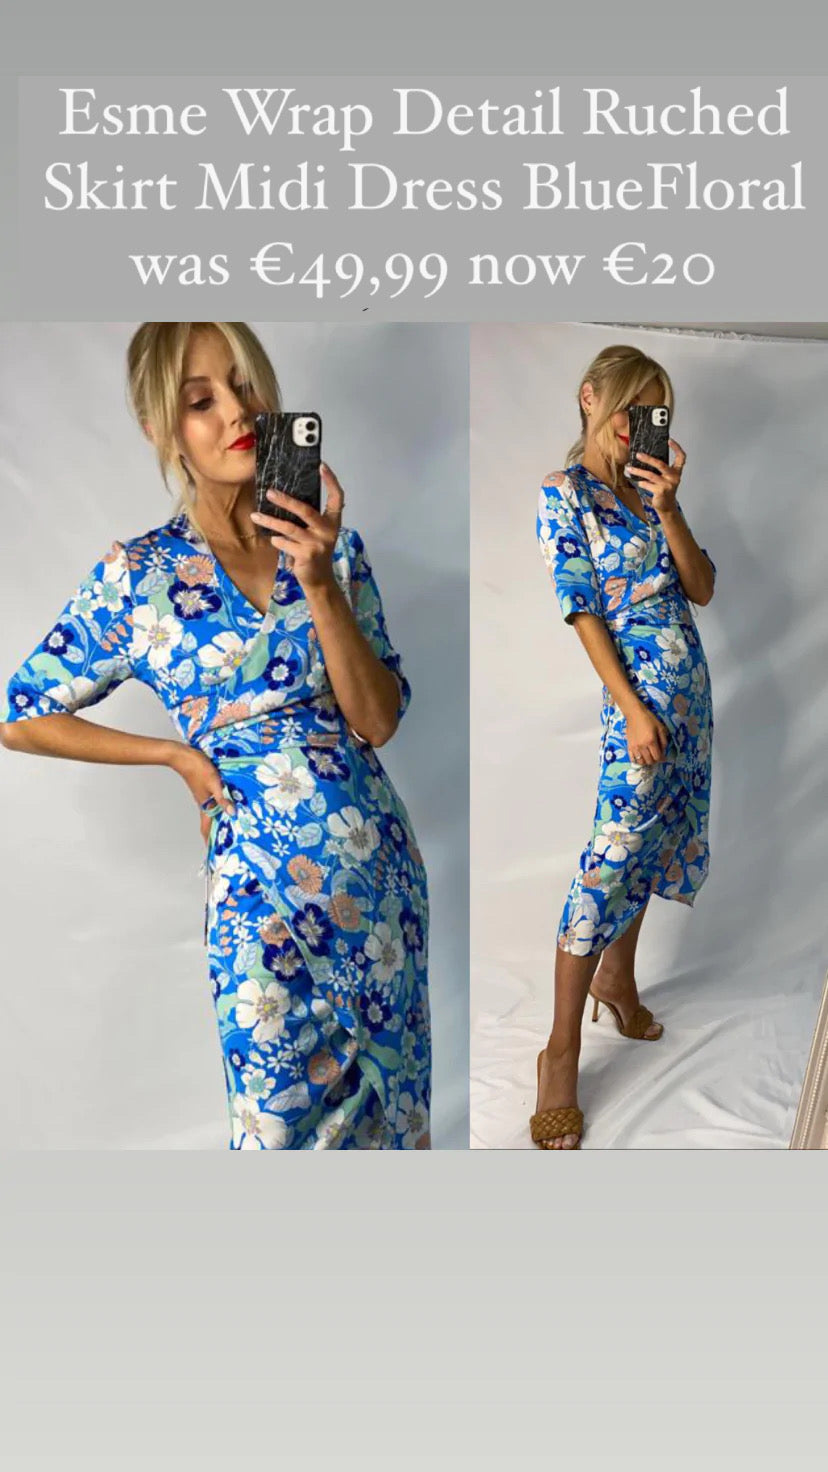 Esme Mixed Wrap Detail Ruched Skirt Midi Dress Blue Floral sale